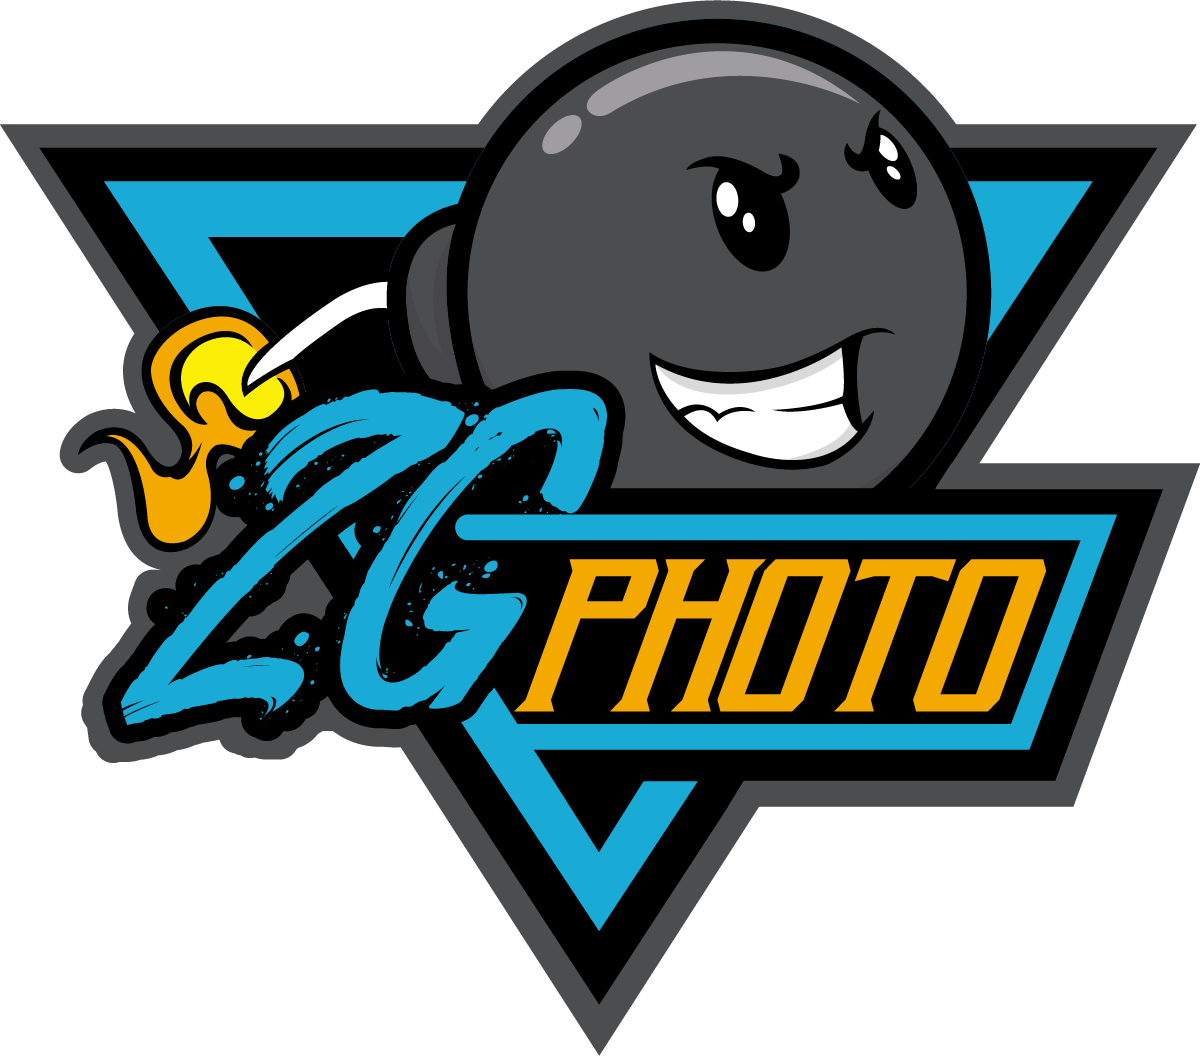 ZGPhoto Logo